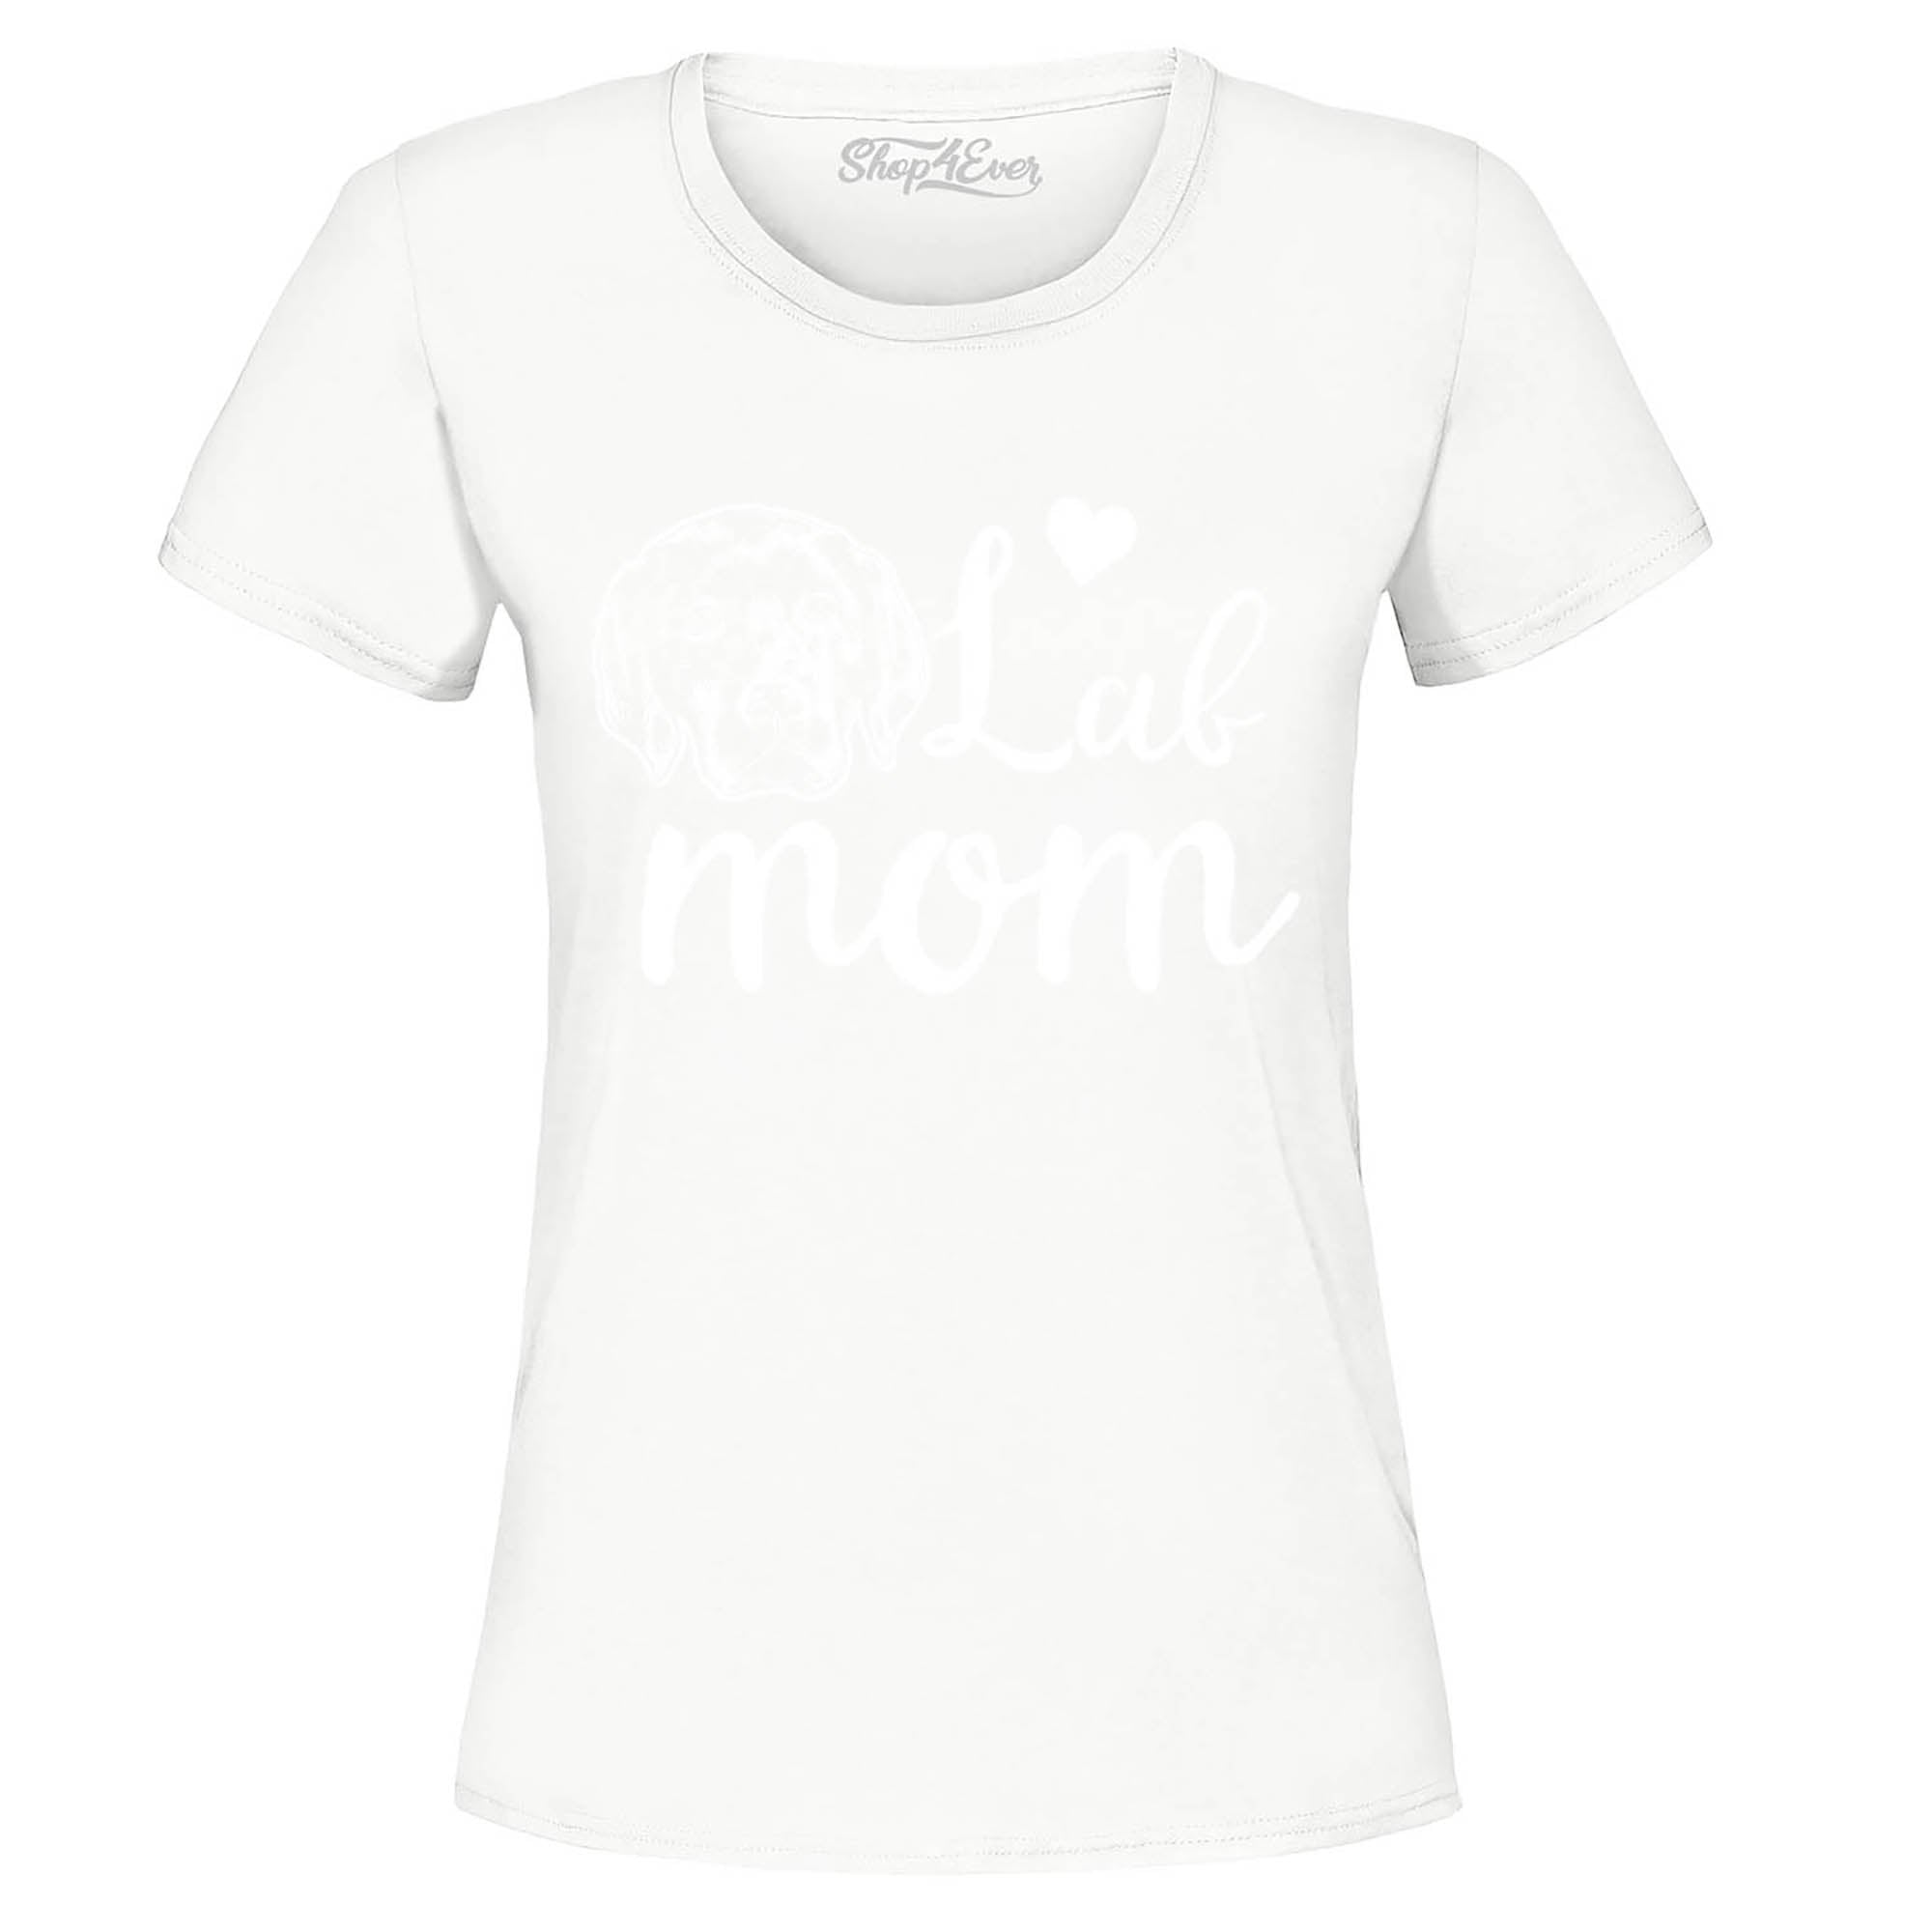 Lab Mom Women's T-Shirt